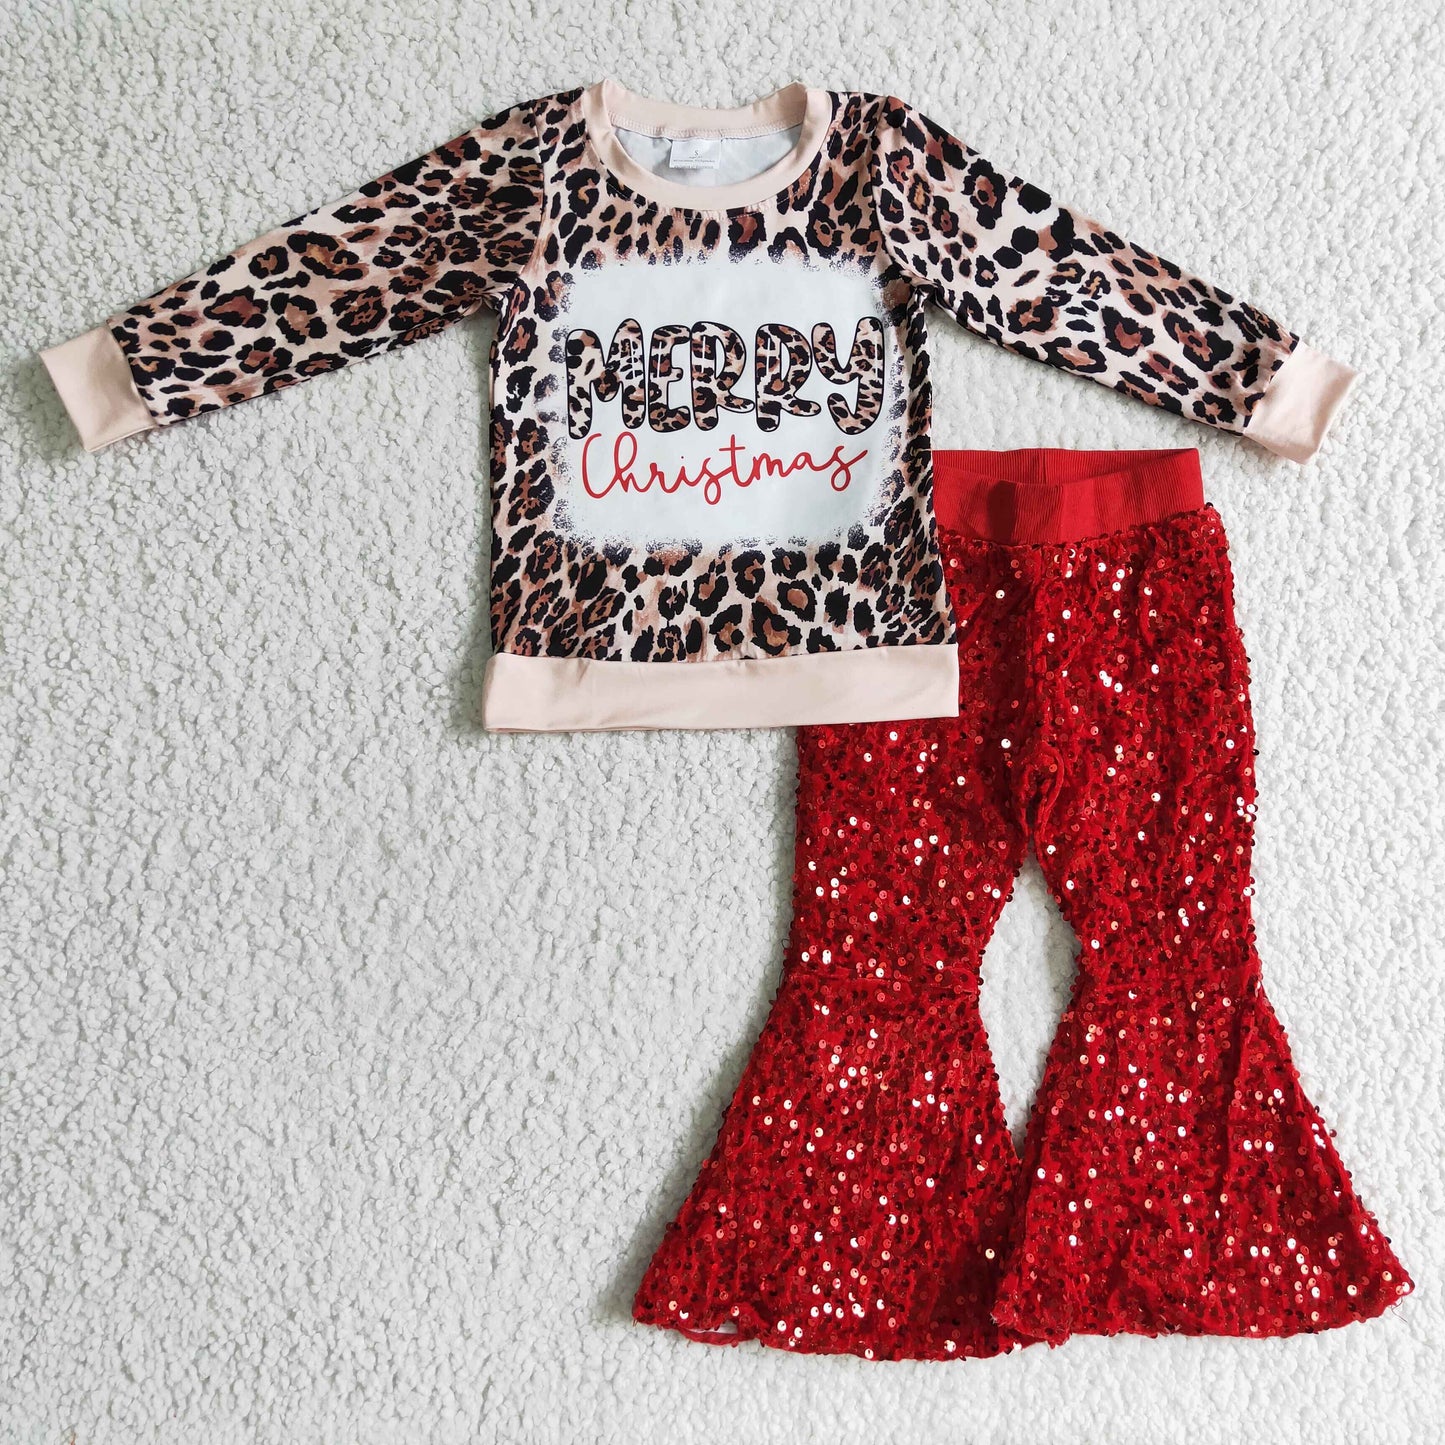 Merry Christmas leopard shirt sequin bell bottom pants girls outfits